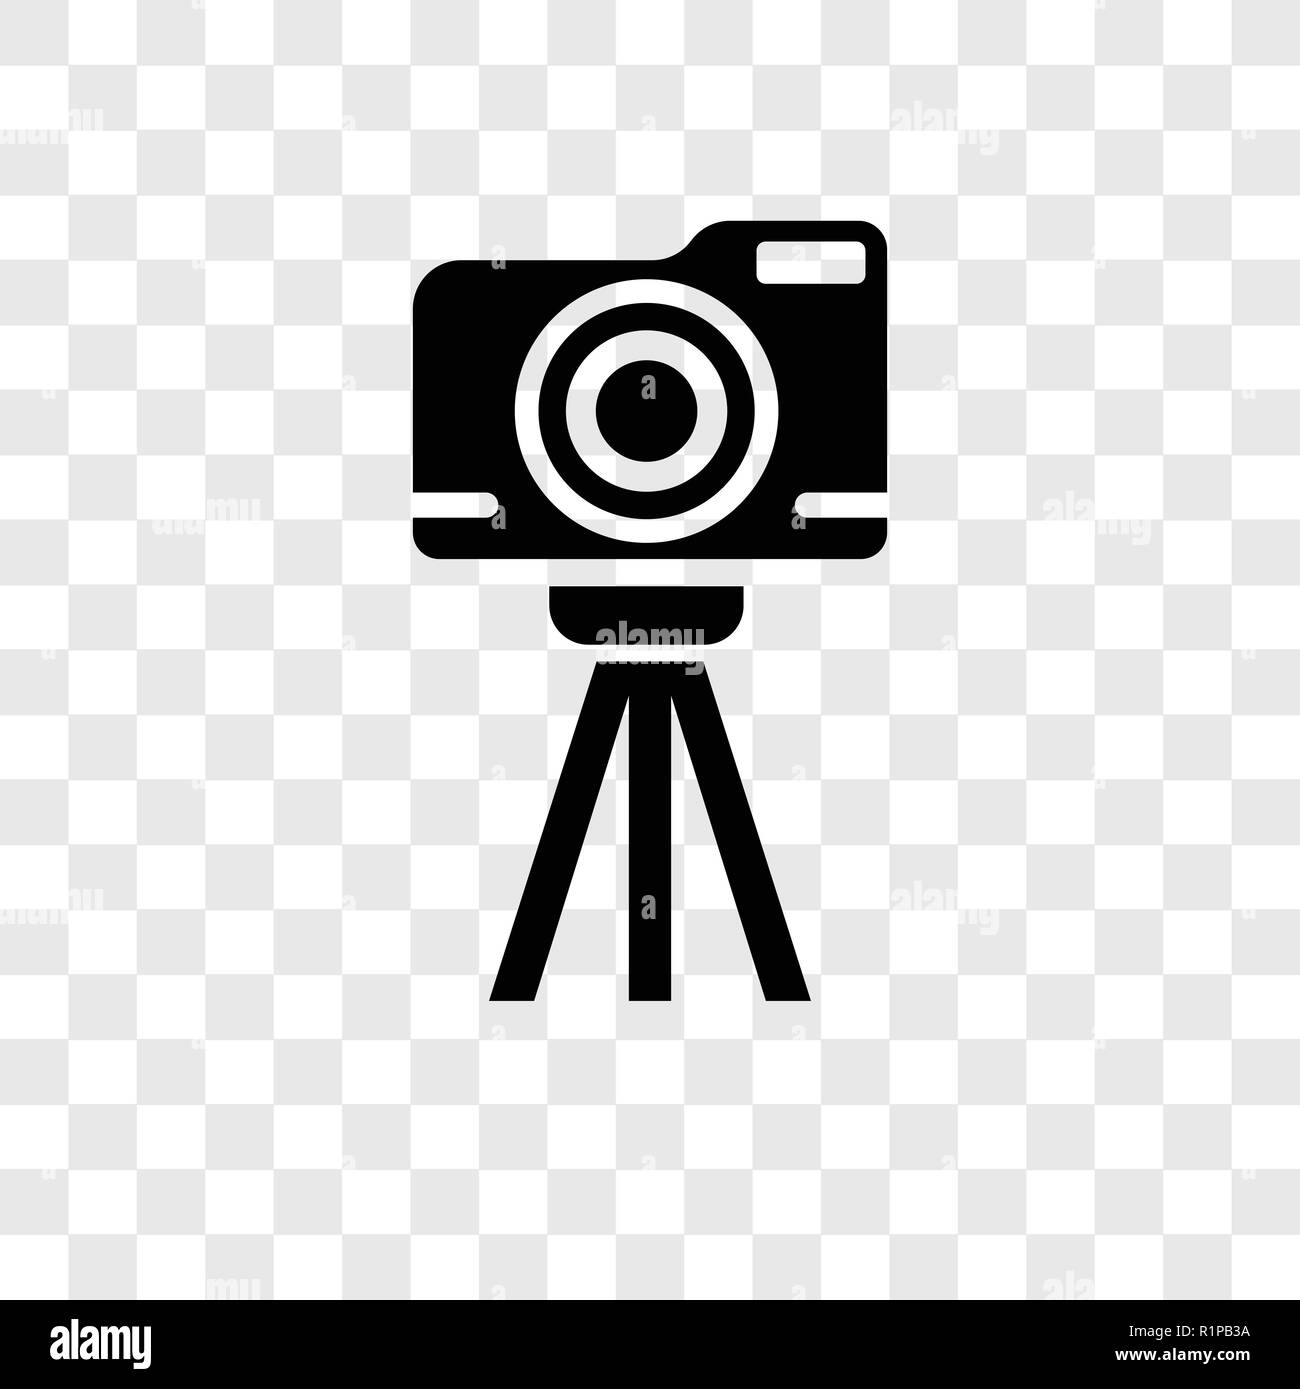 Camera logo Black and White Stock Photos & Images - Alamy